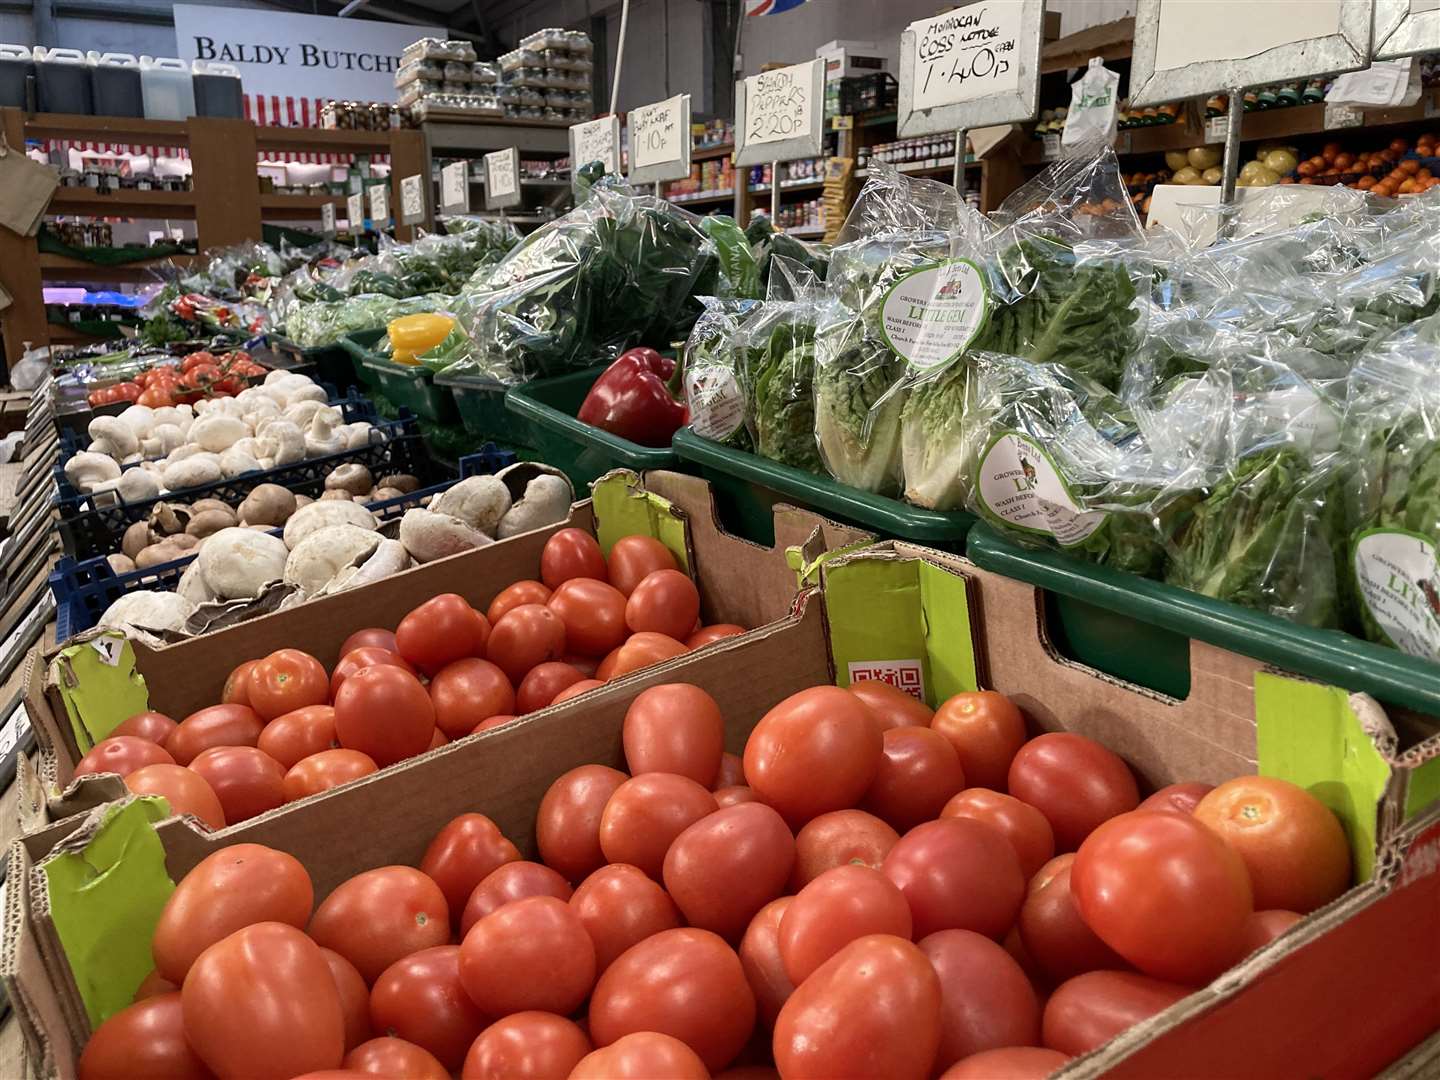 No tomato shortage at Brambledown Farm Shop